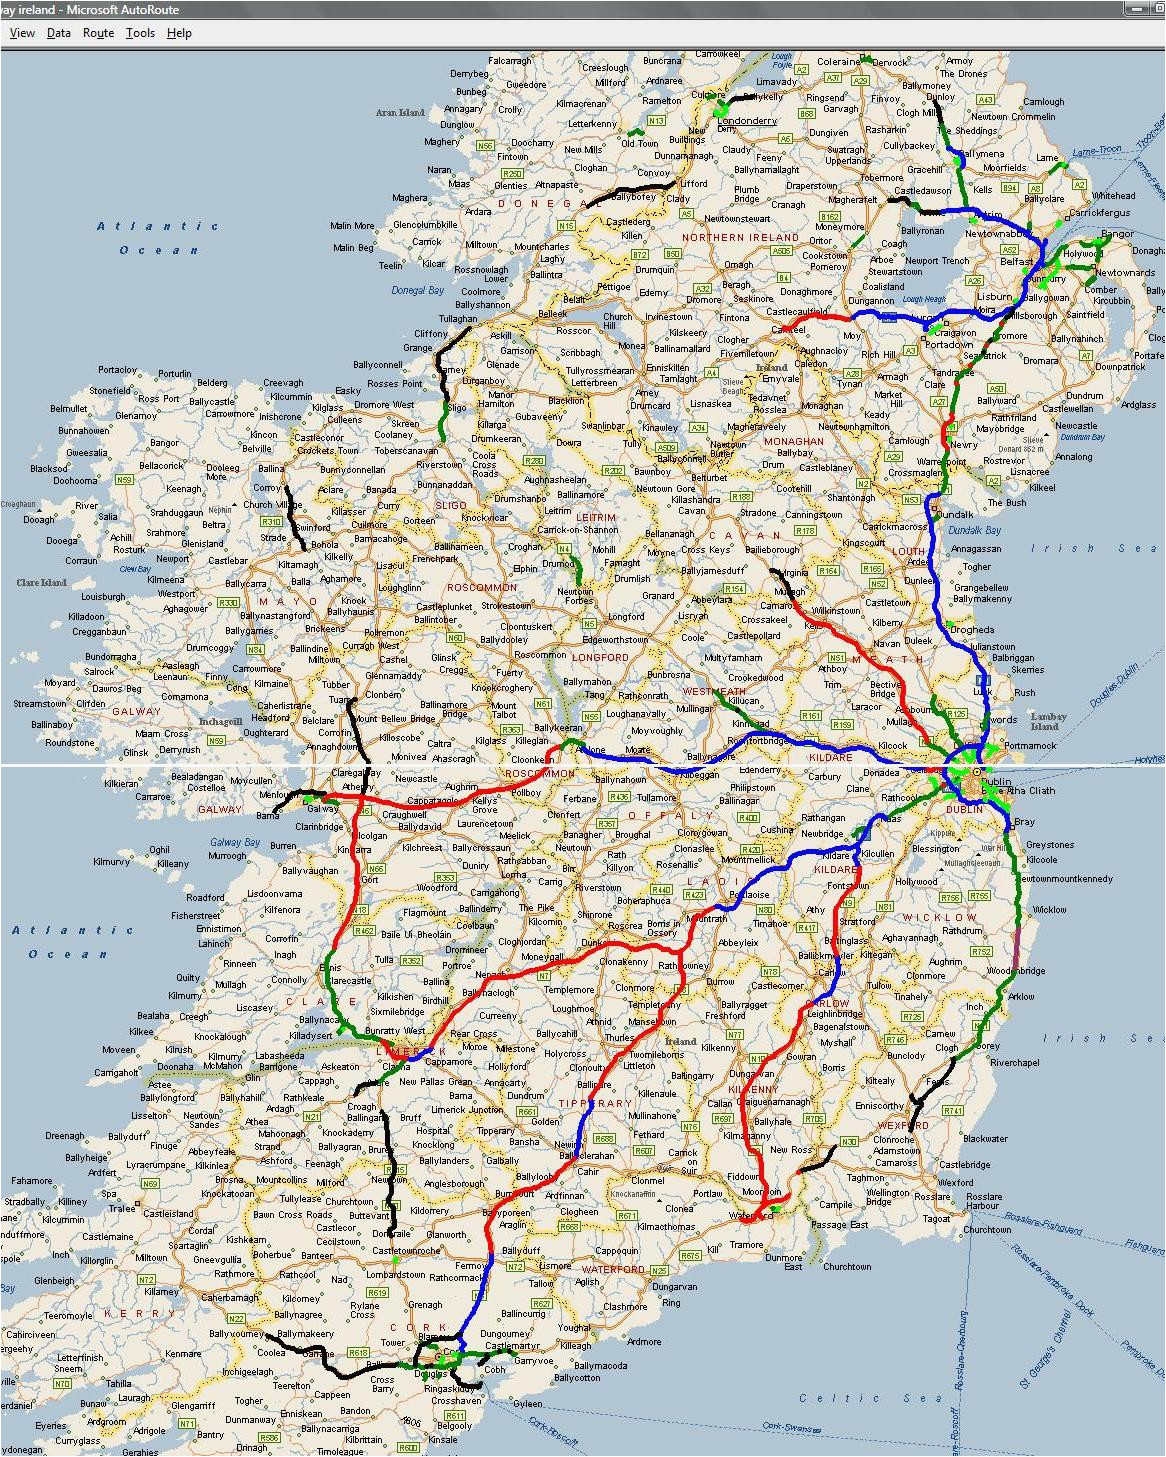 Ireland Road Map Pdf Ireland Road Map